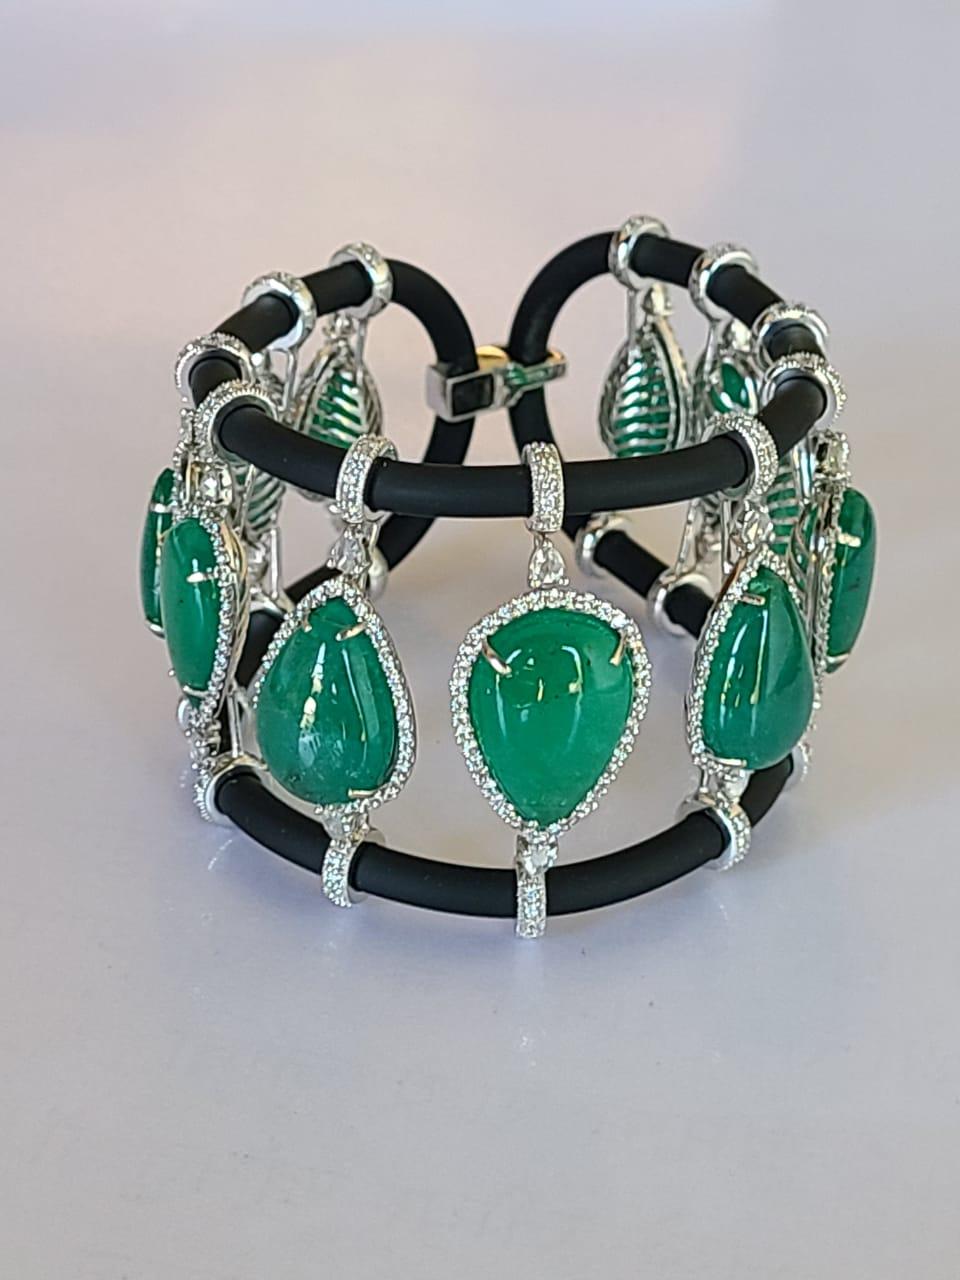 Cabochon 76.73 Carat Natural Emerald and Diamond Bracelet Set in 18 Karat Gold